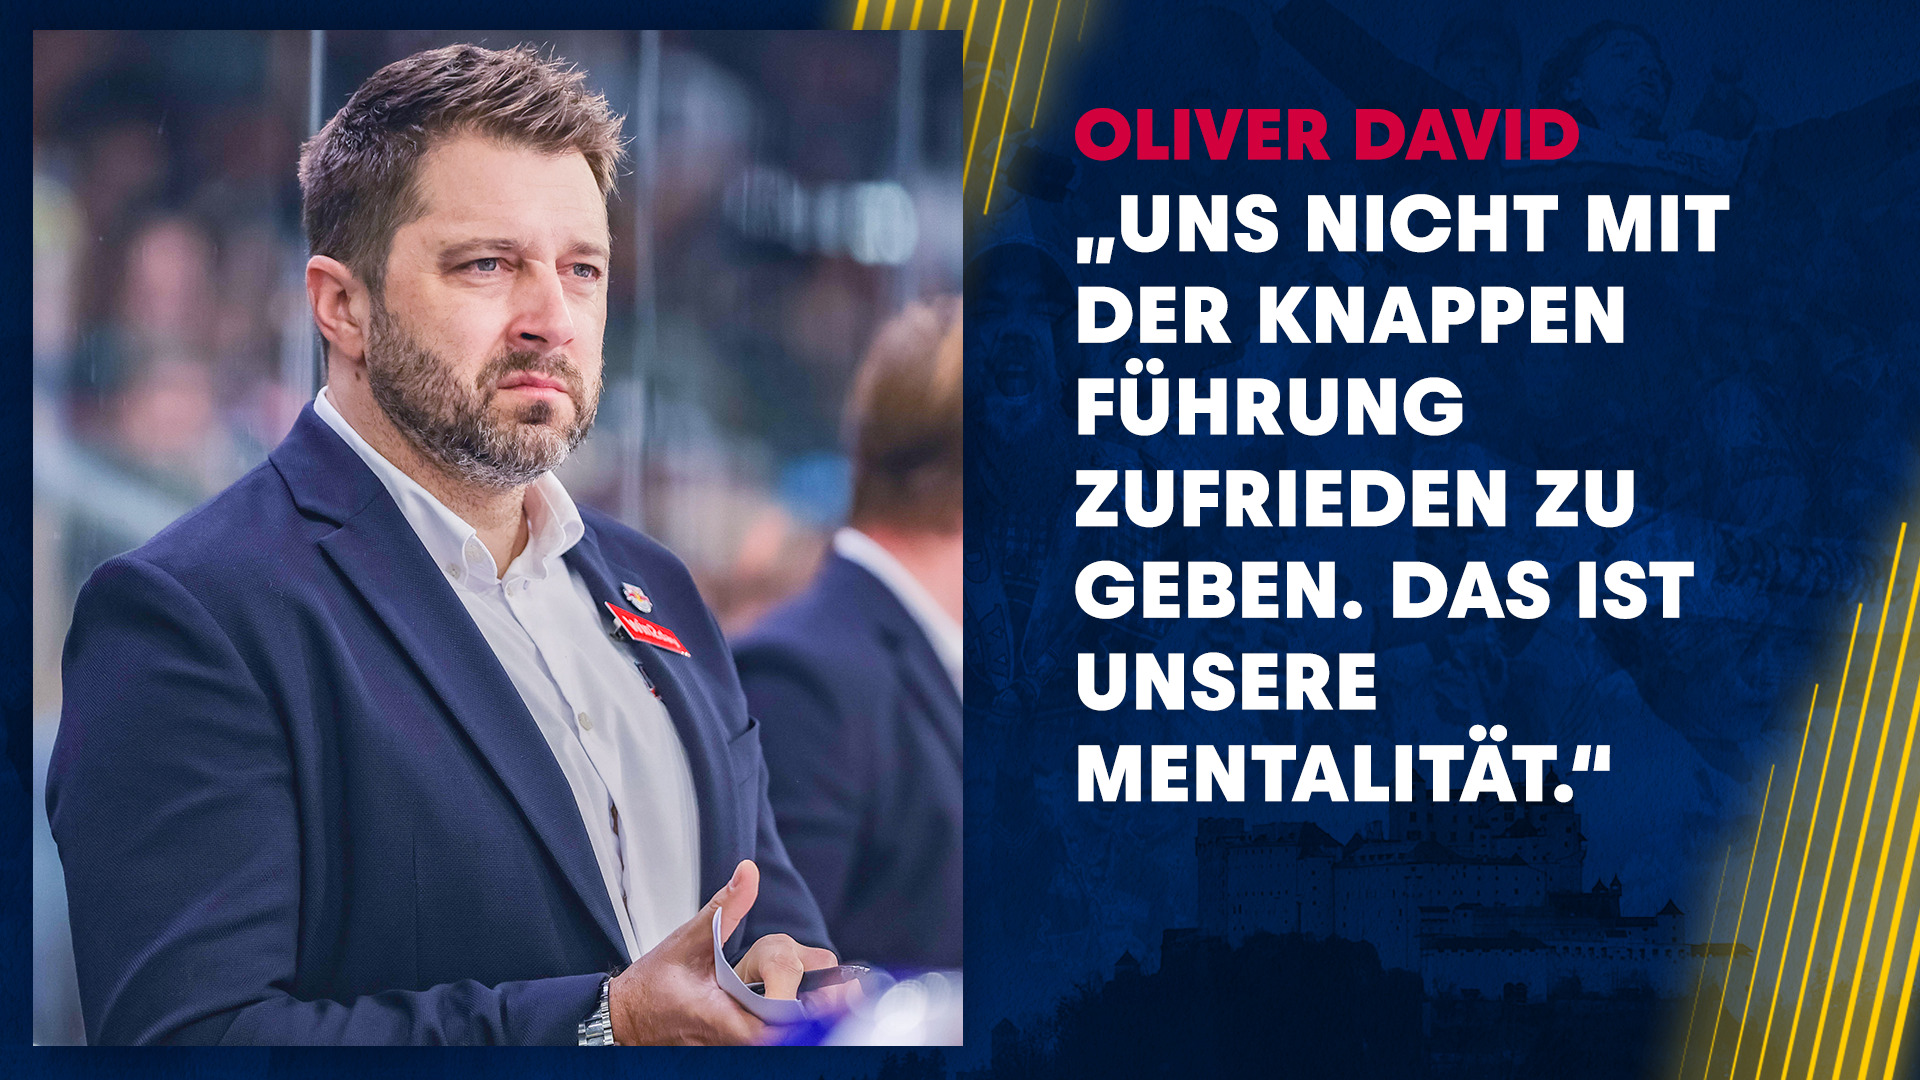 Statement: Oliver David 